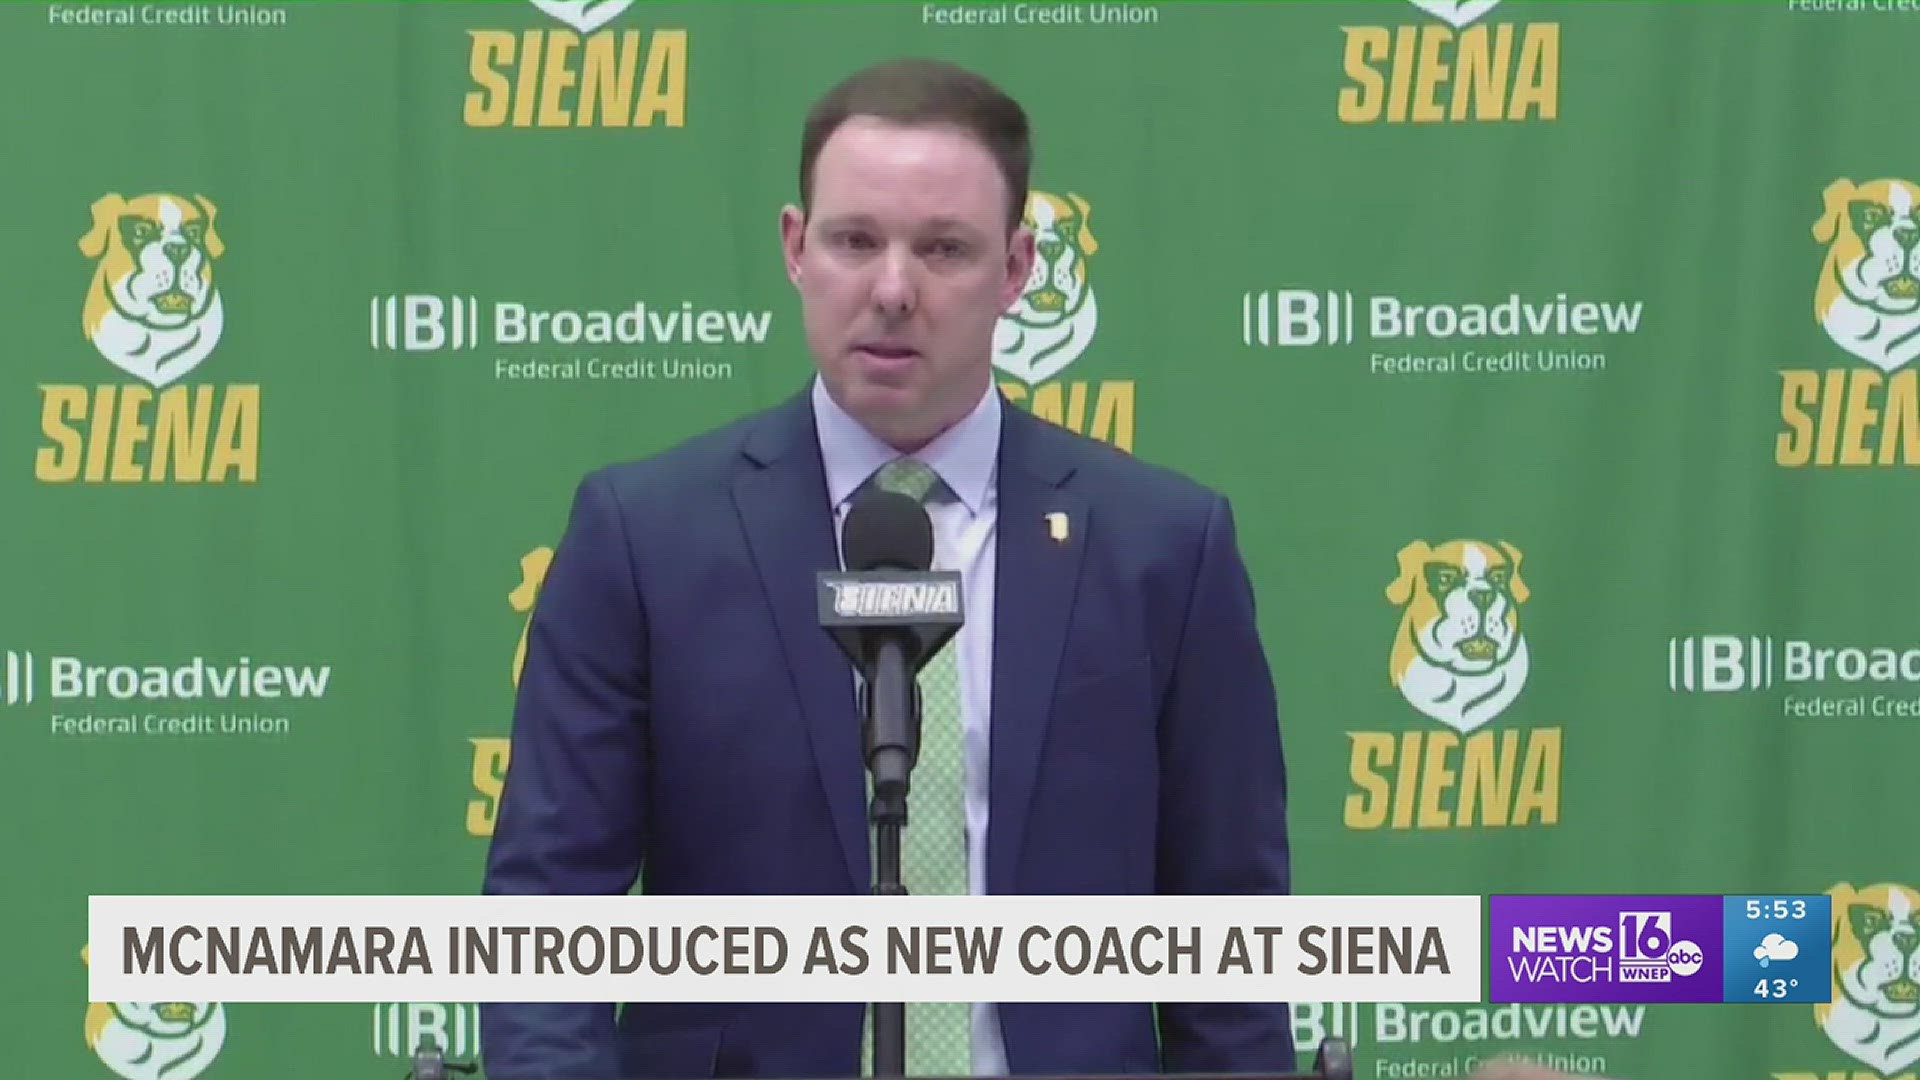 McNamara leaves Syracuse University to become next head coach at Siena